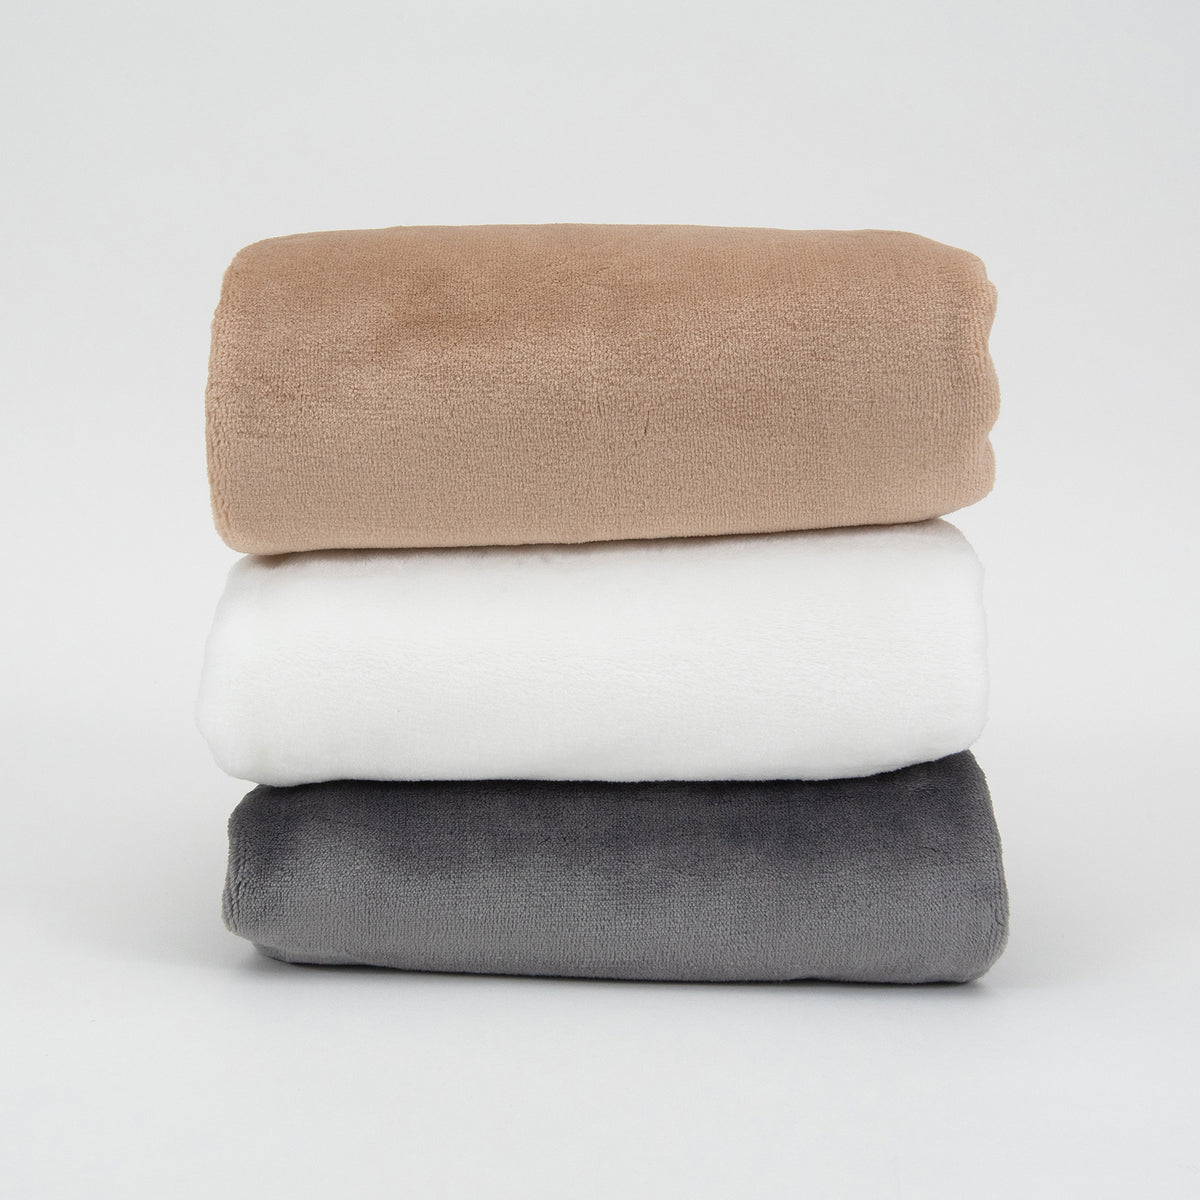 Stack of Luster Loft Fleece Blankets in Latte, Pure White, and Charcoal - Luster Loft Fleece Blankets - Luster Loft Fleece Throws - American Blanket Company